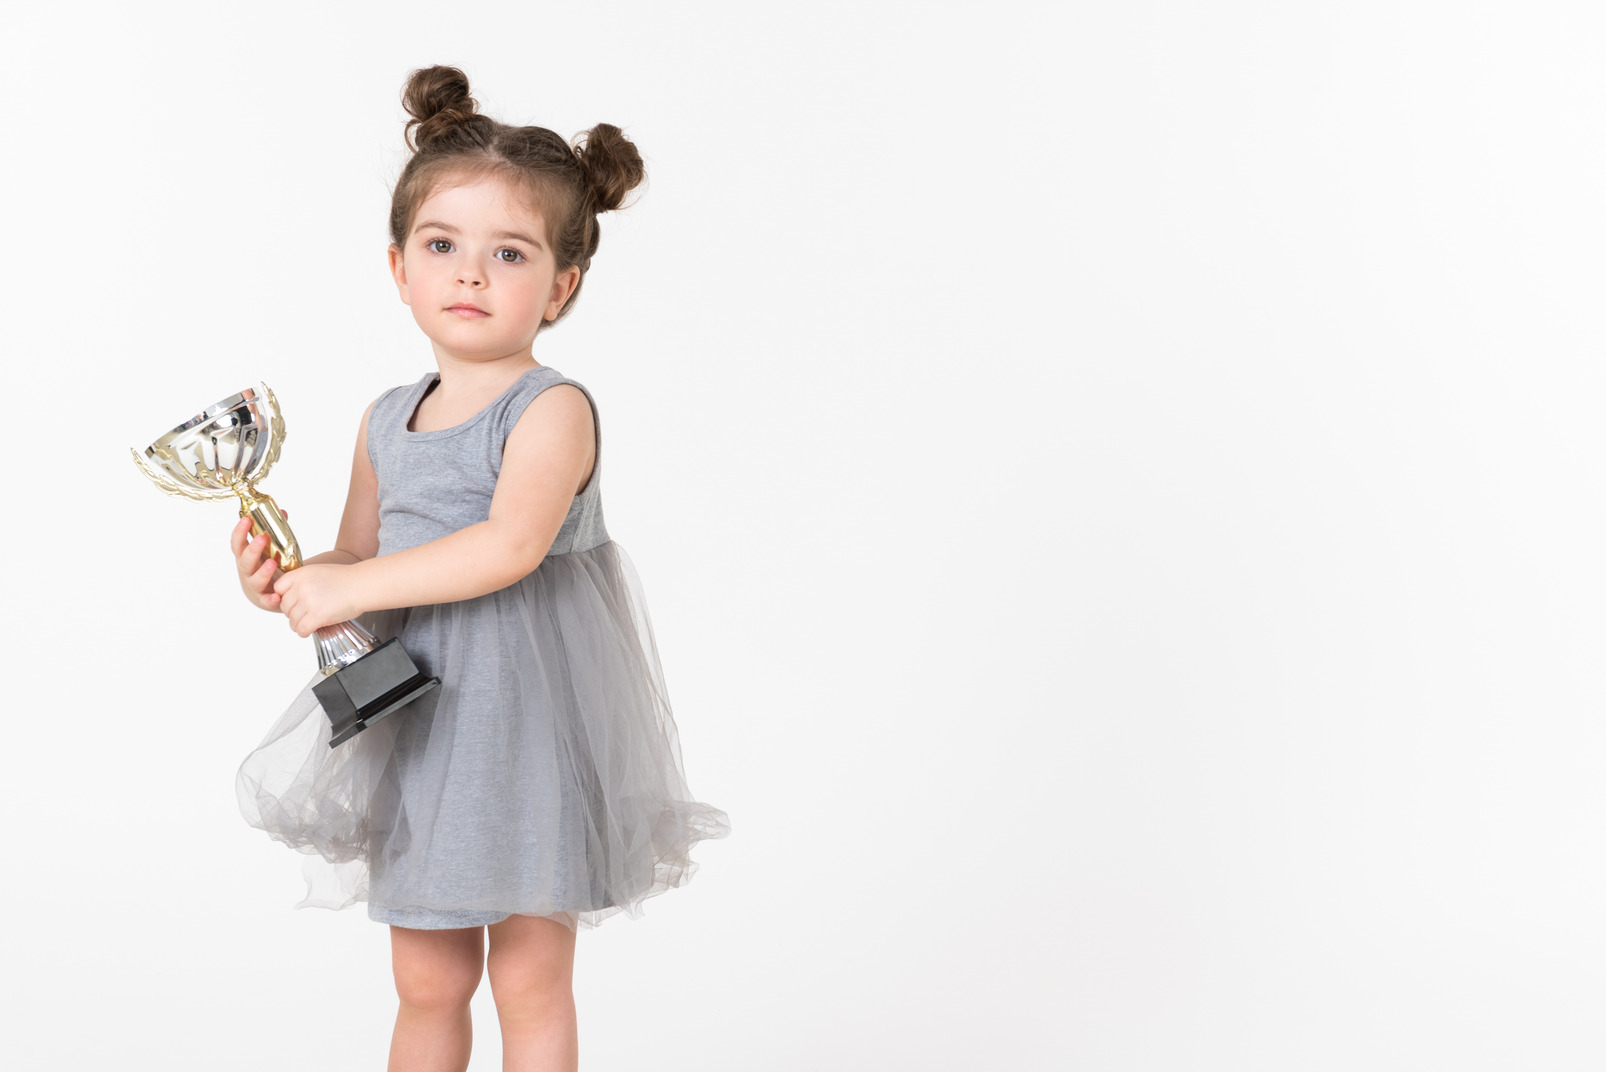 Little girl holding an award cup